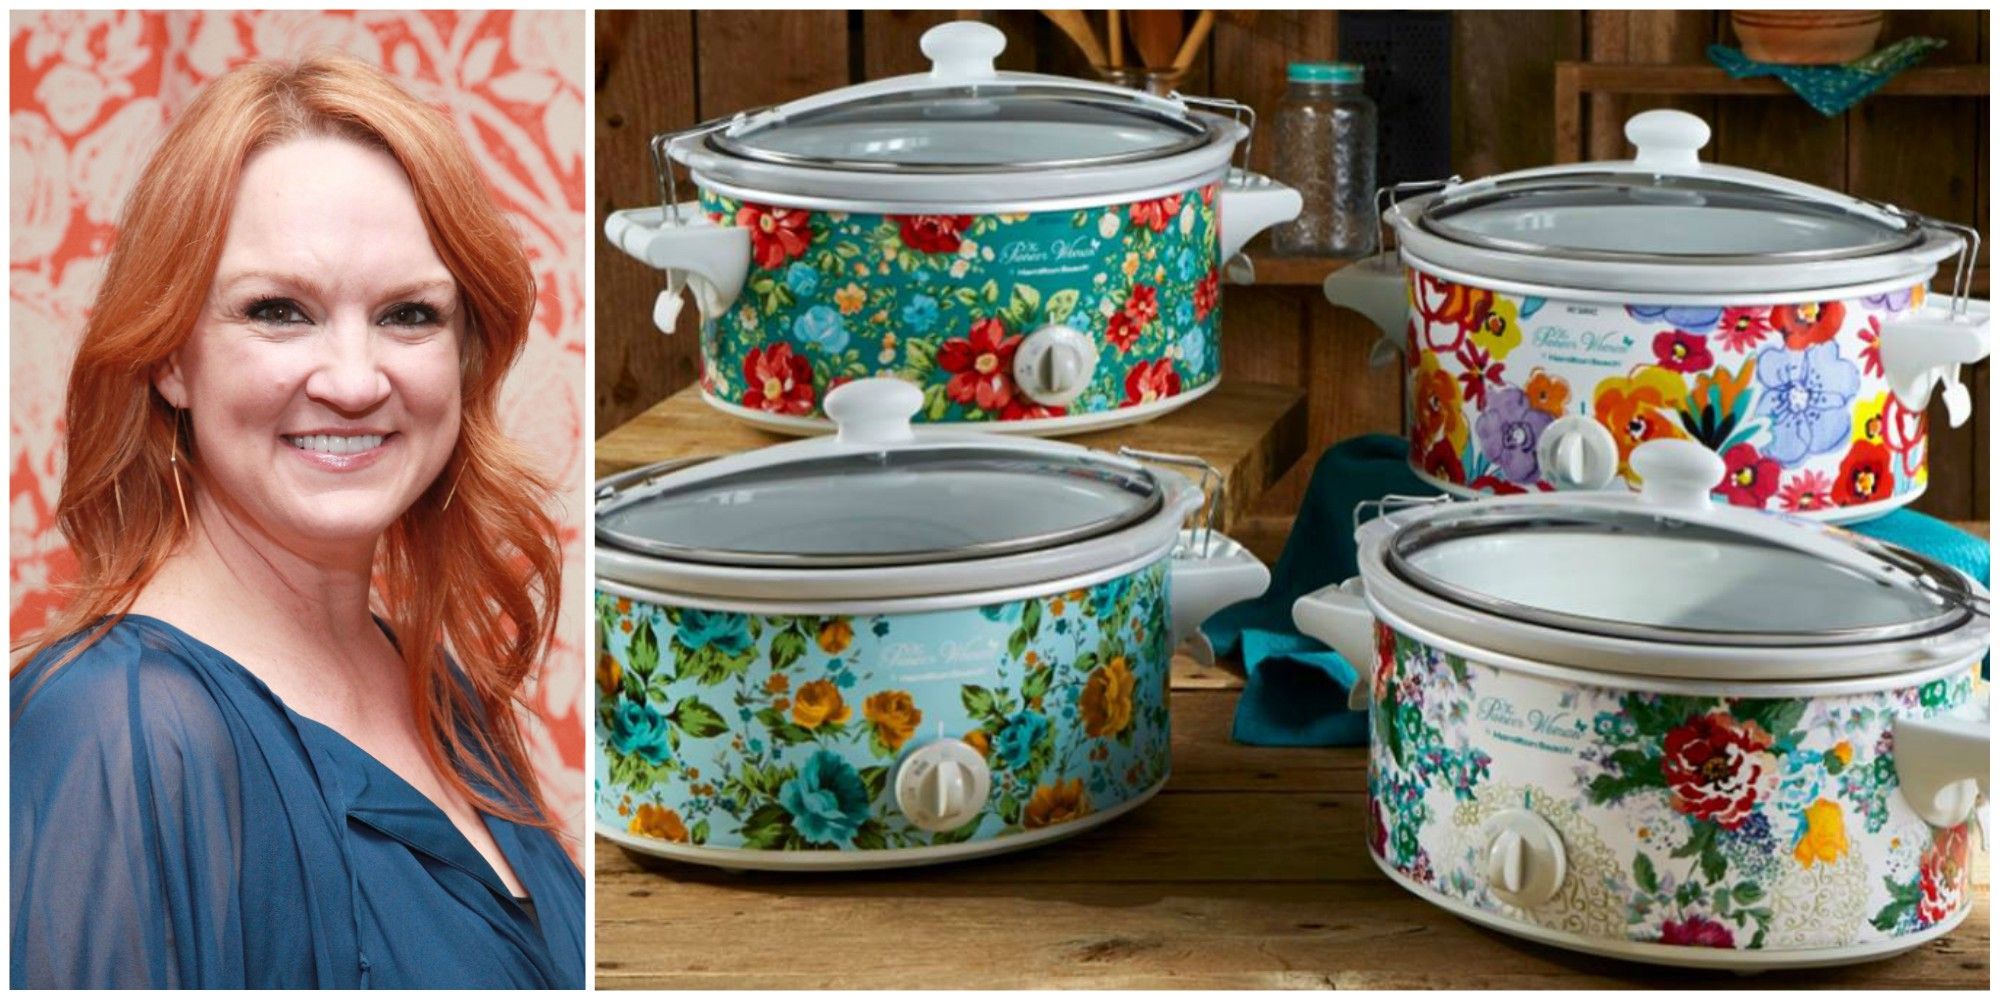 Hamilton Beach Brands Inc. LFNVGNT The Pioneer Woman 1.5 Liter Fiona Floral Slow  Cooker Crock Pot Cooking Pot